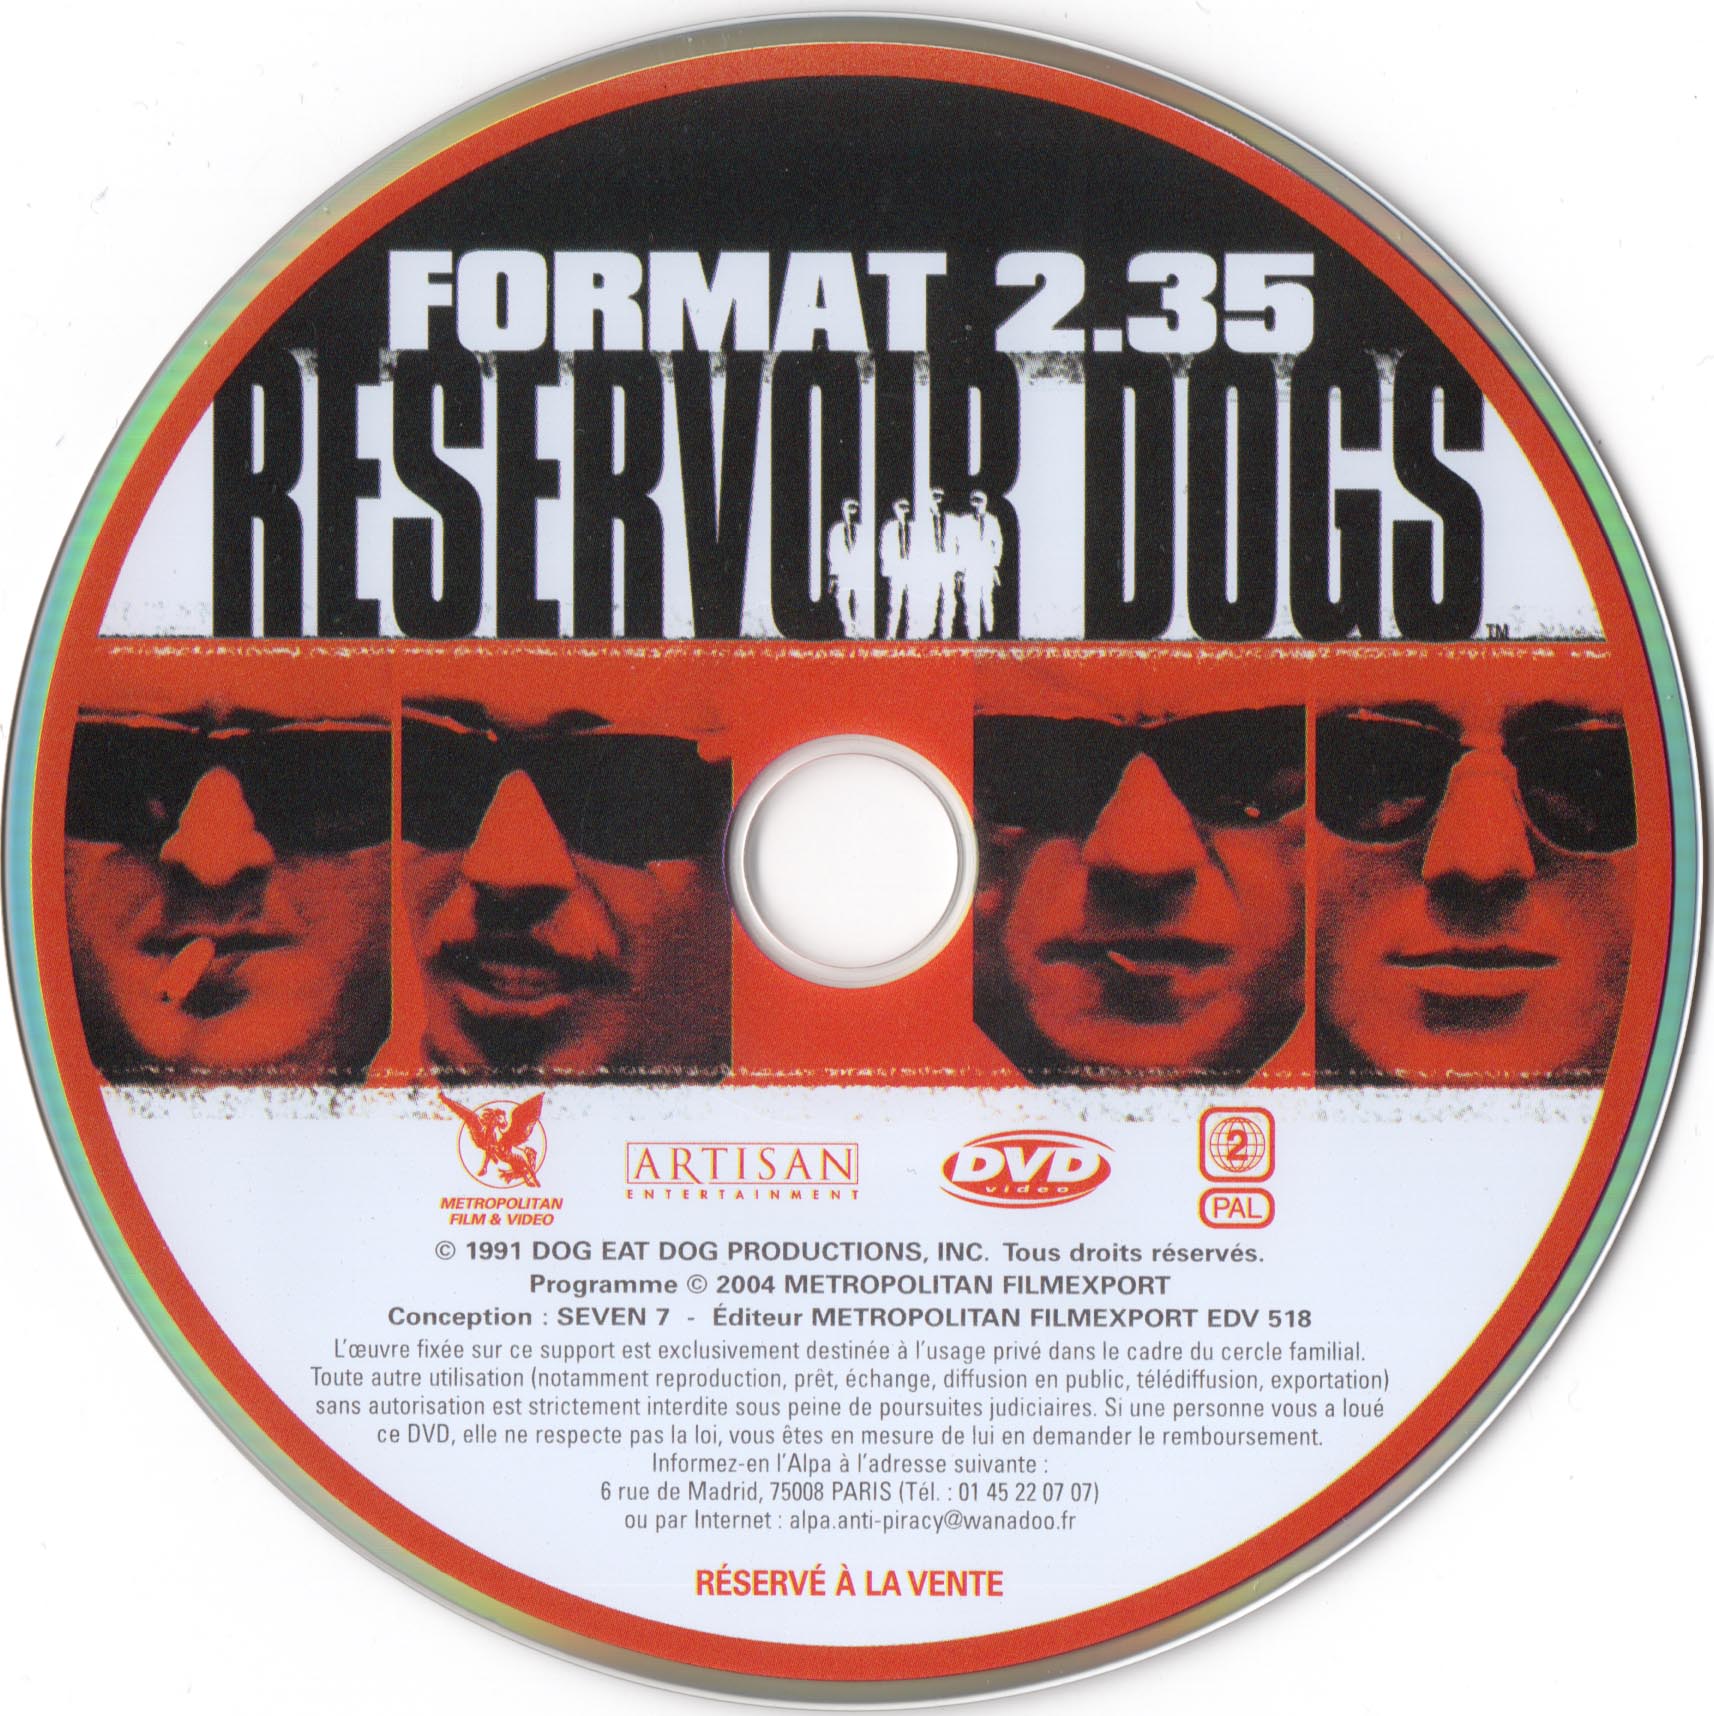 Reservoir dogs DISC 3